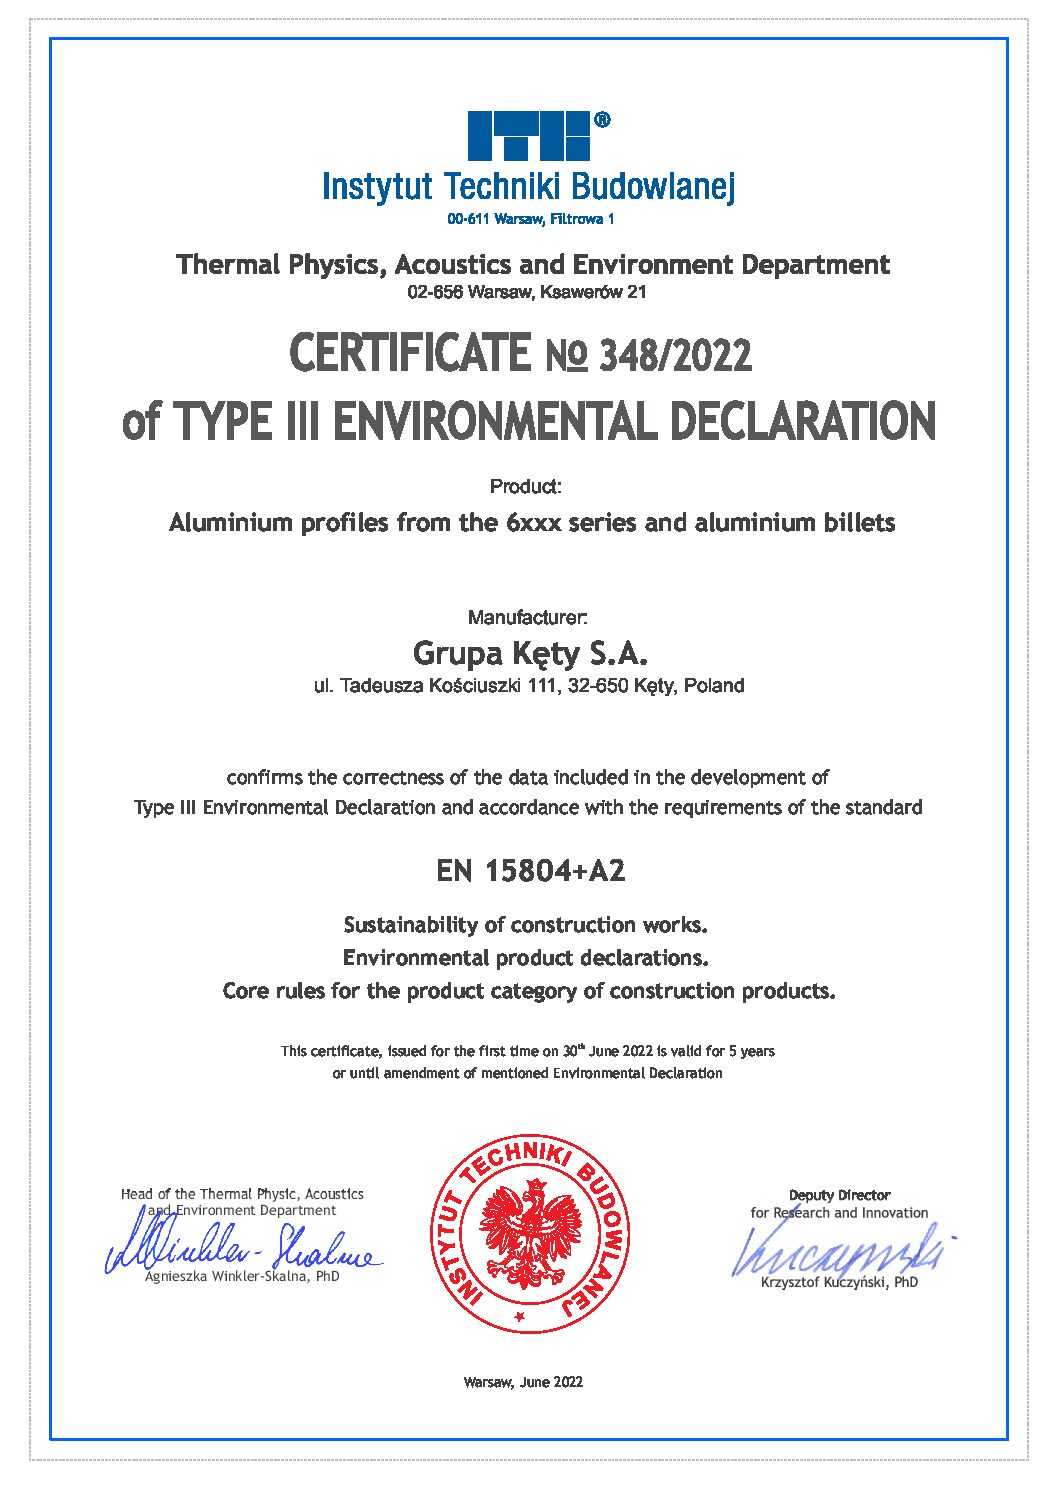 Environmental Product Declaration Type III ITB No. 348/2022